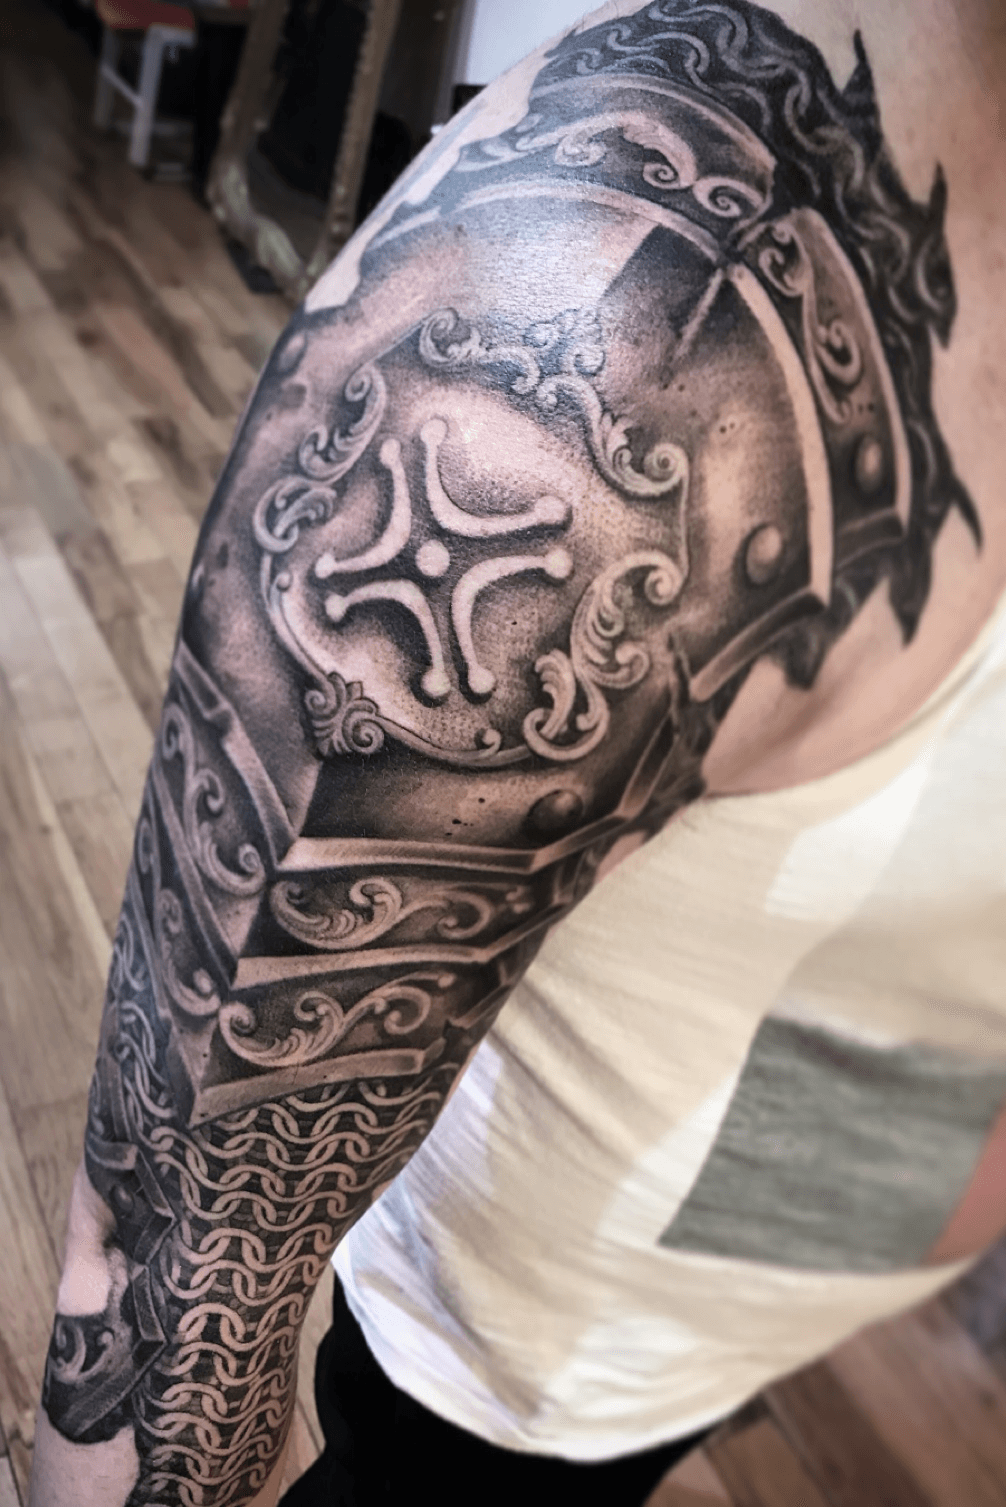 Armor sleeve tattoo by ShizZuro on DeviantArt